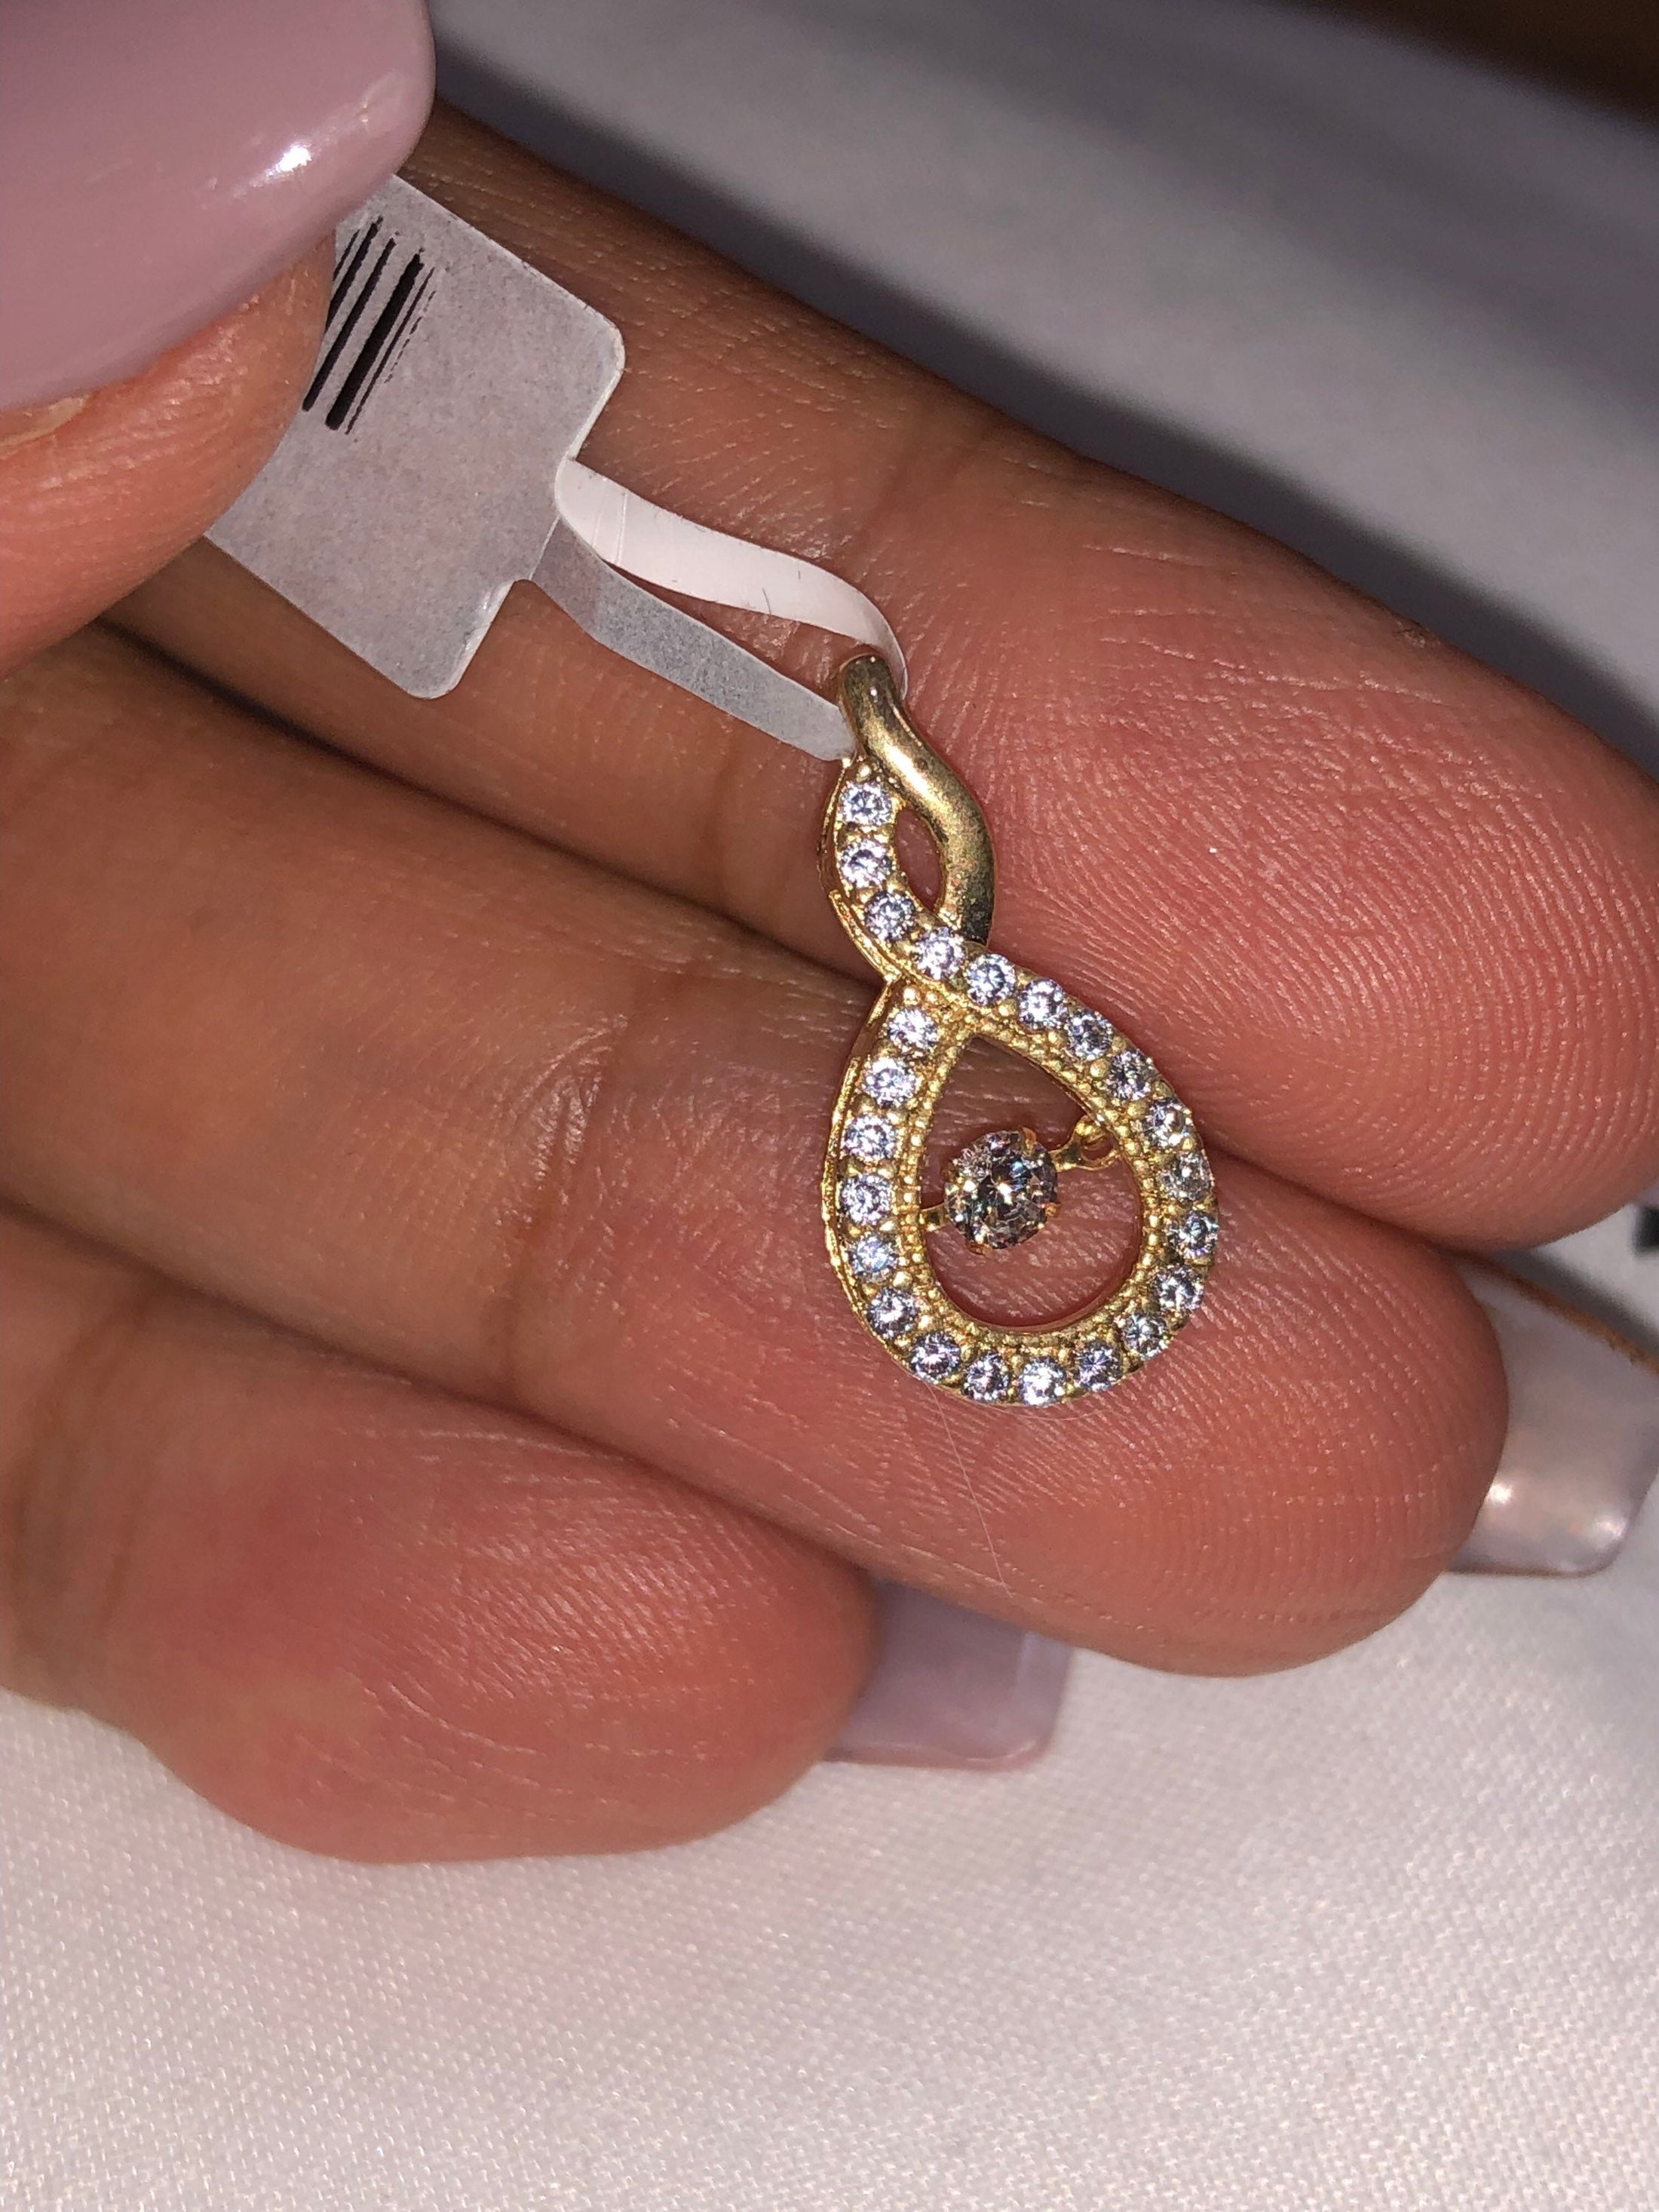 Beautiful VVS clarity Swarovski Crystal dancing diamond pendant, mesmerizing beautiful gift for women, dances and sparkles when worn